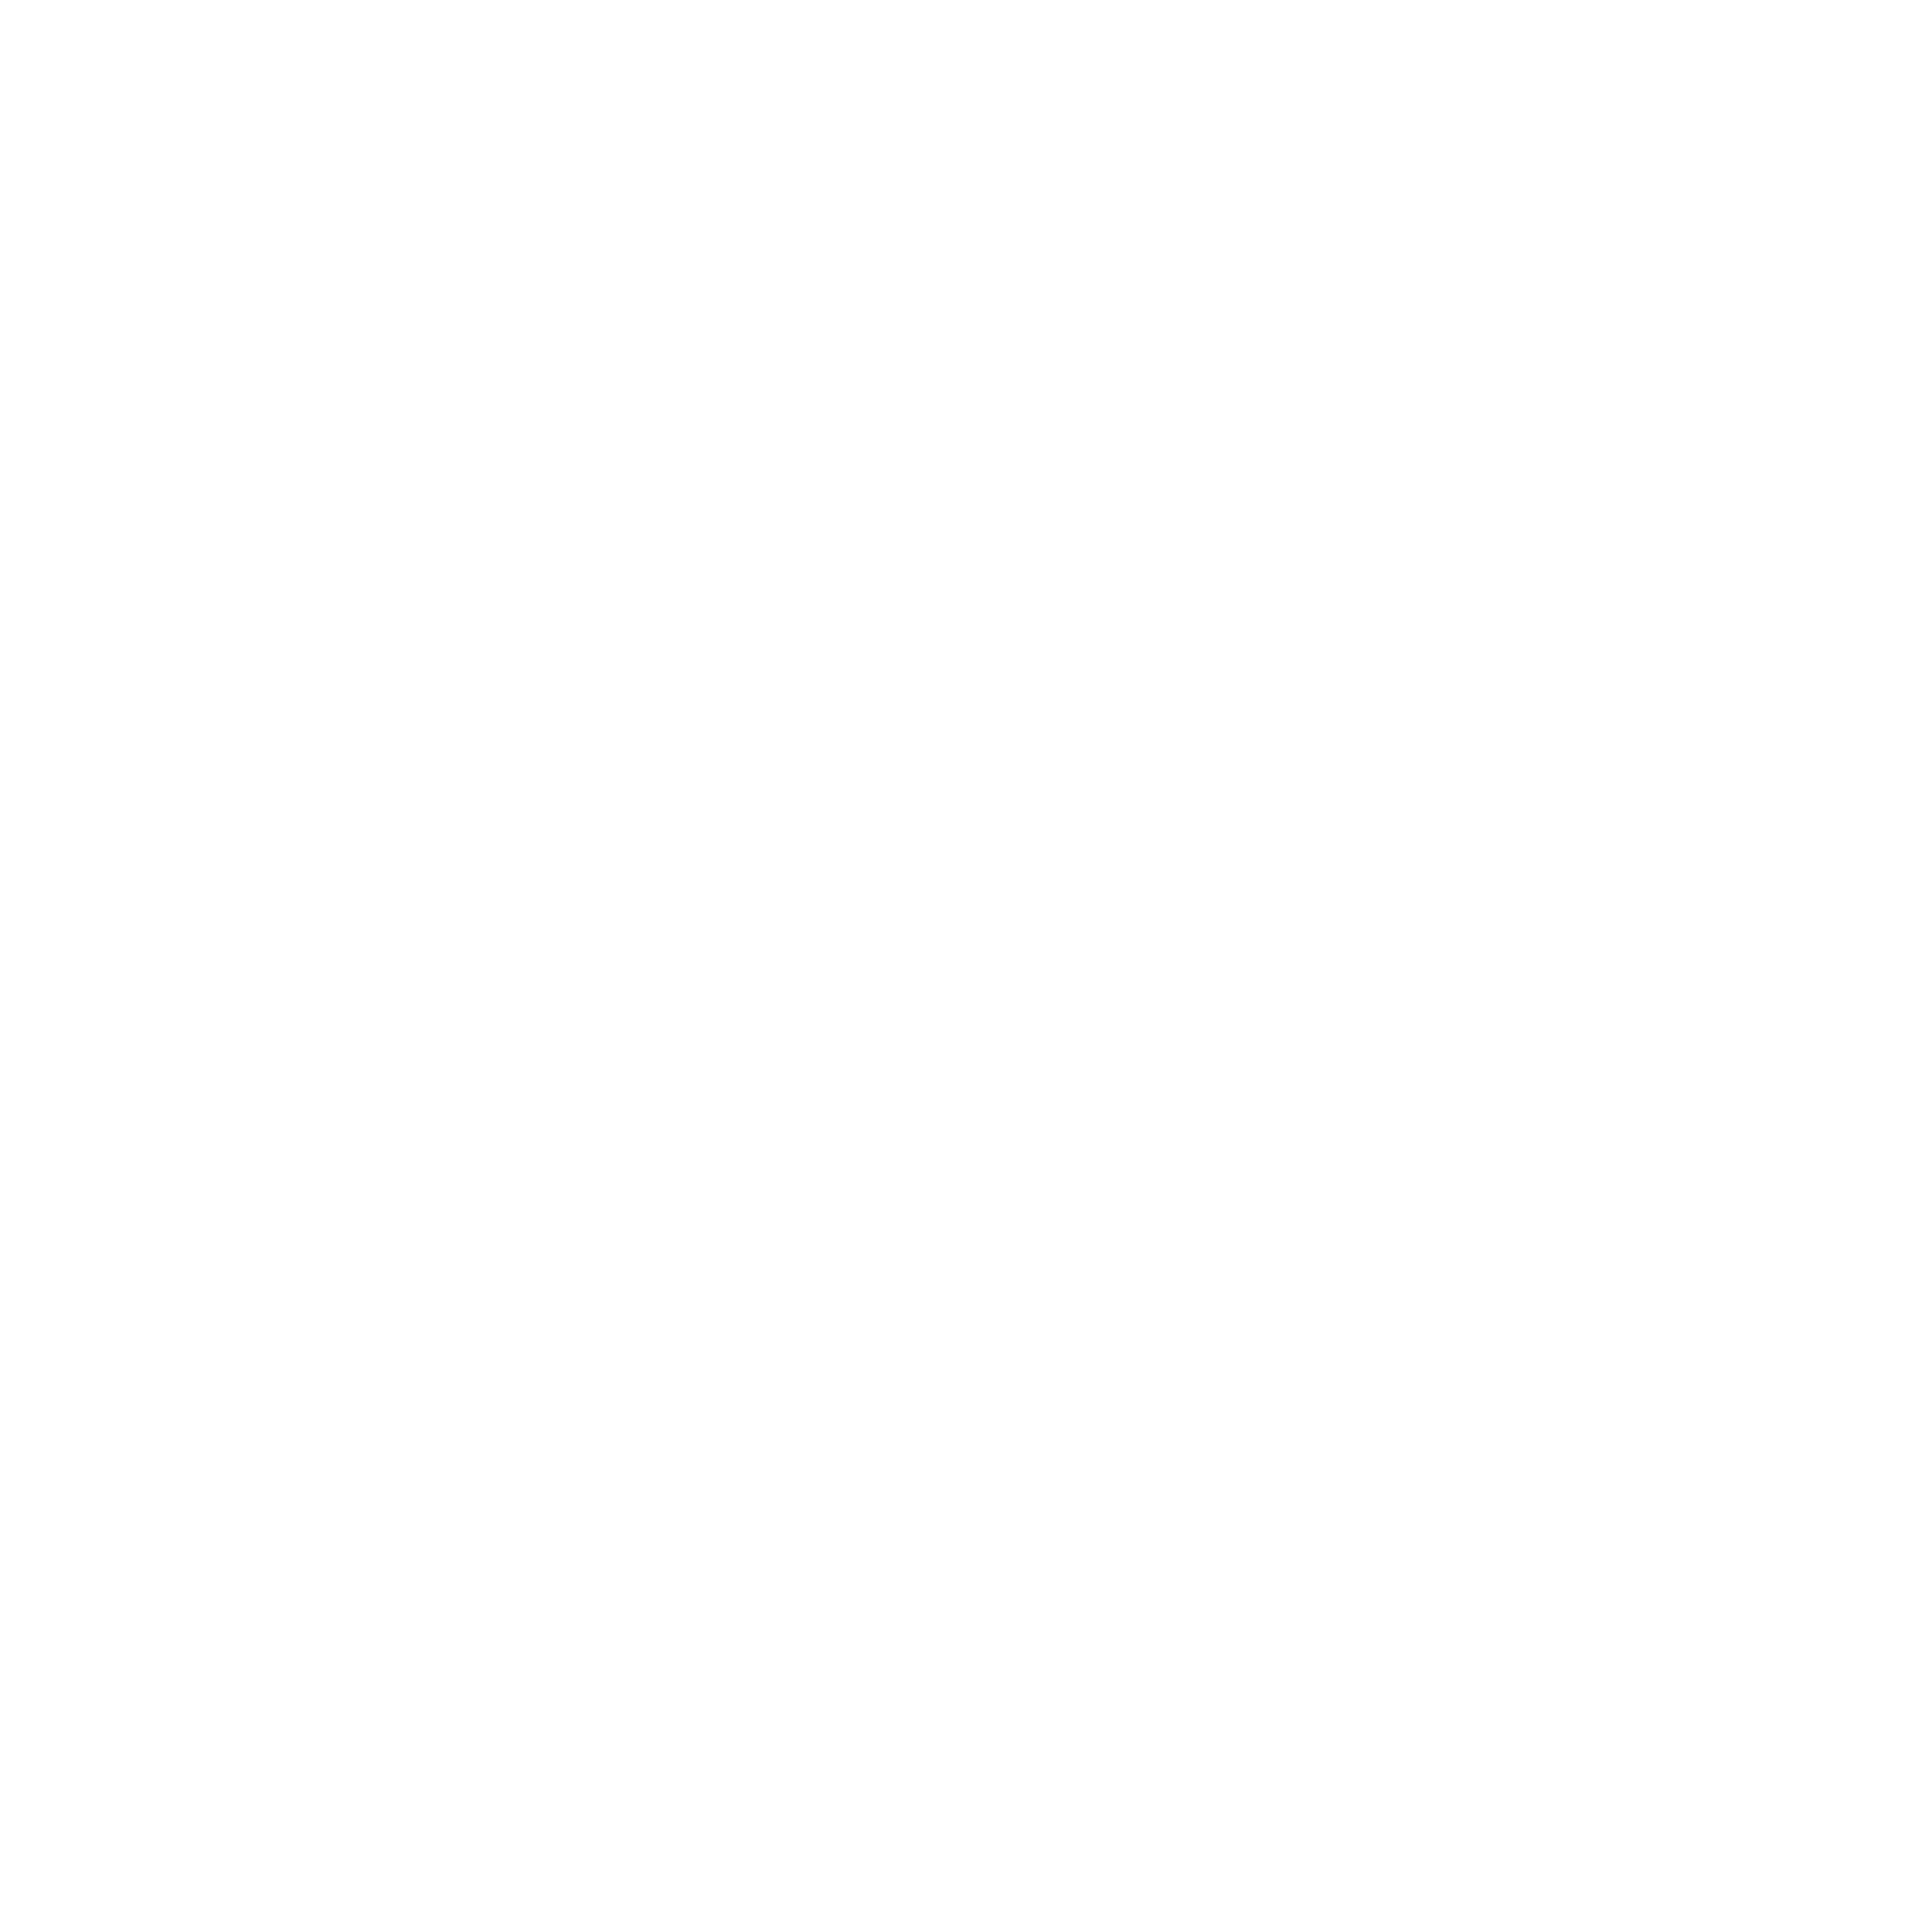 Strong Investments Logo - Strong Investments Logo PNG Transparent & SVG Vector - Freebie Supply